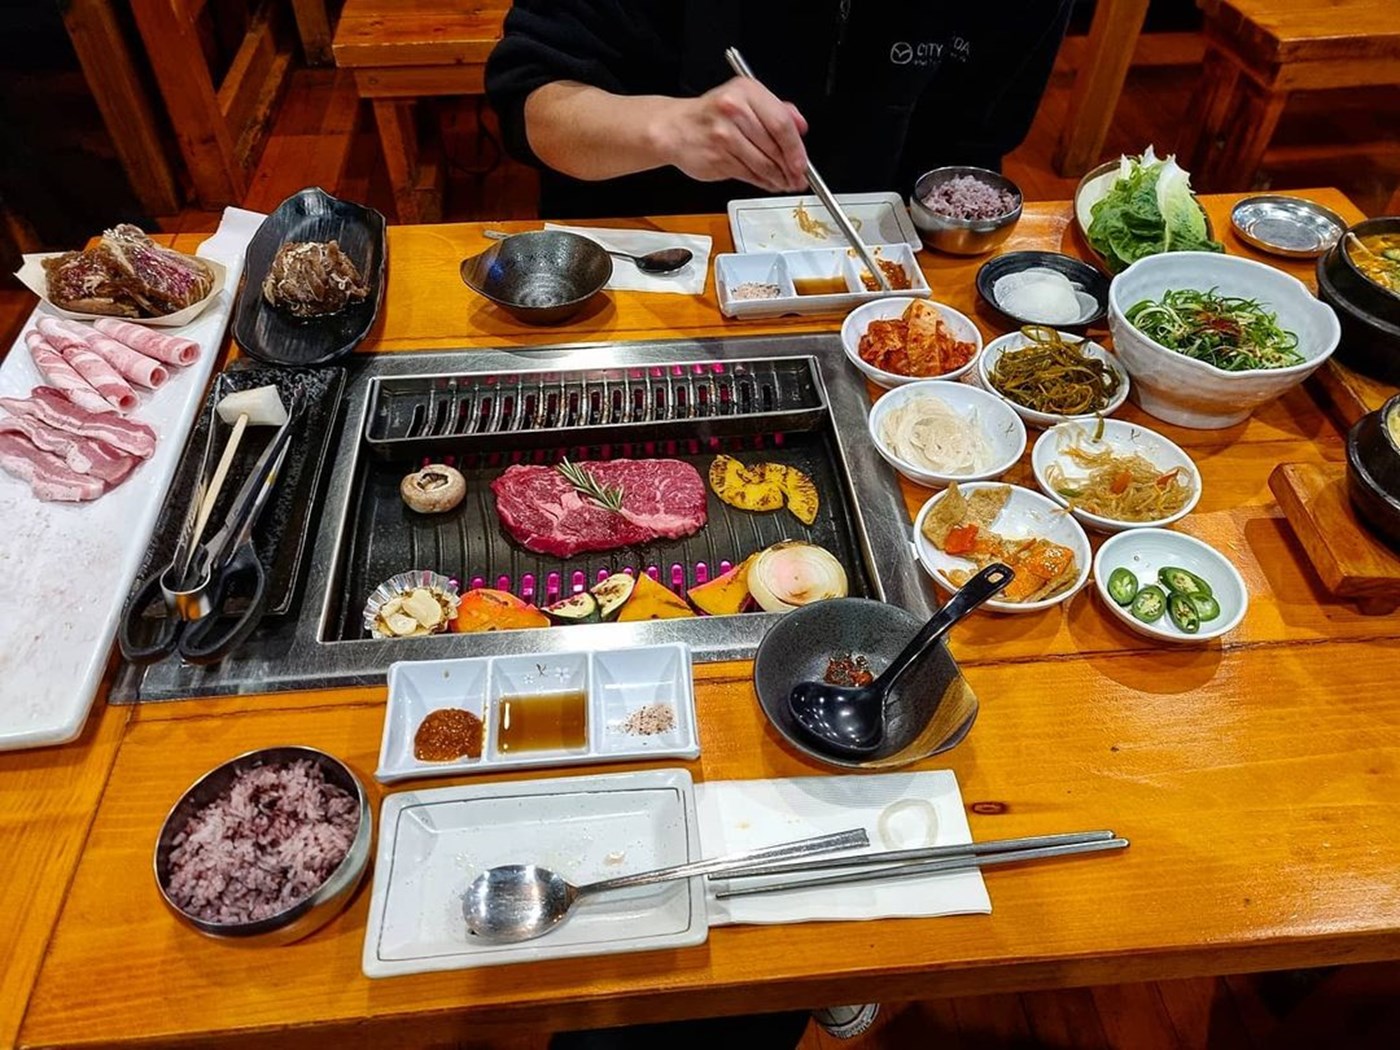 Bbq ouga korean 全城火红韩国烧烤店